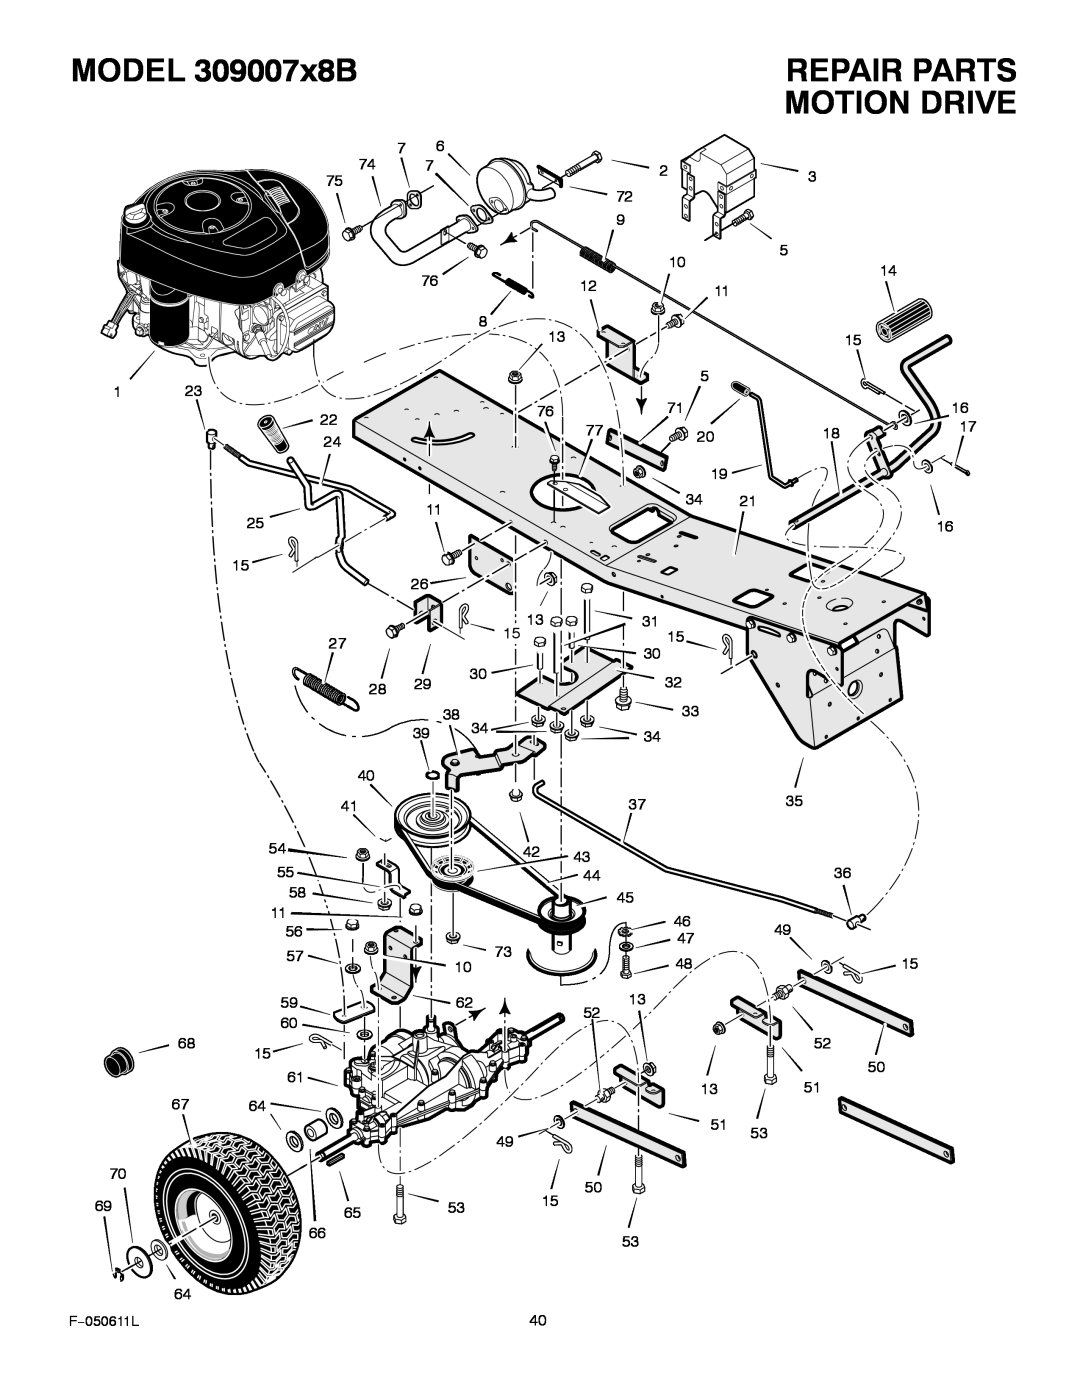 Murray manual Motion Drive, Repair Parts, MODEL 309007x8B 